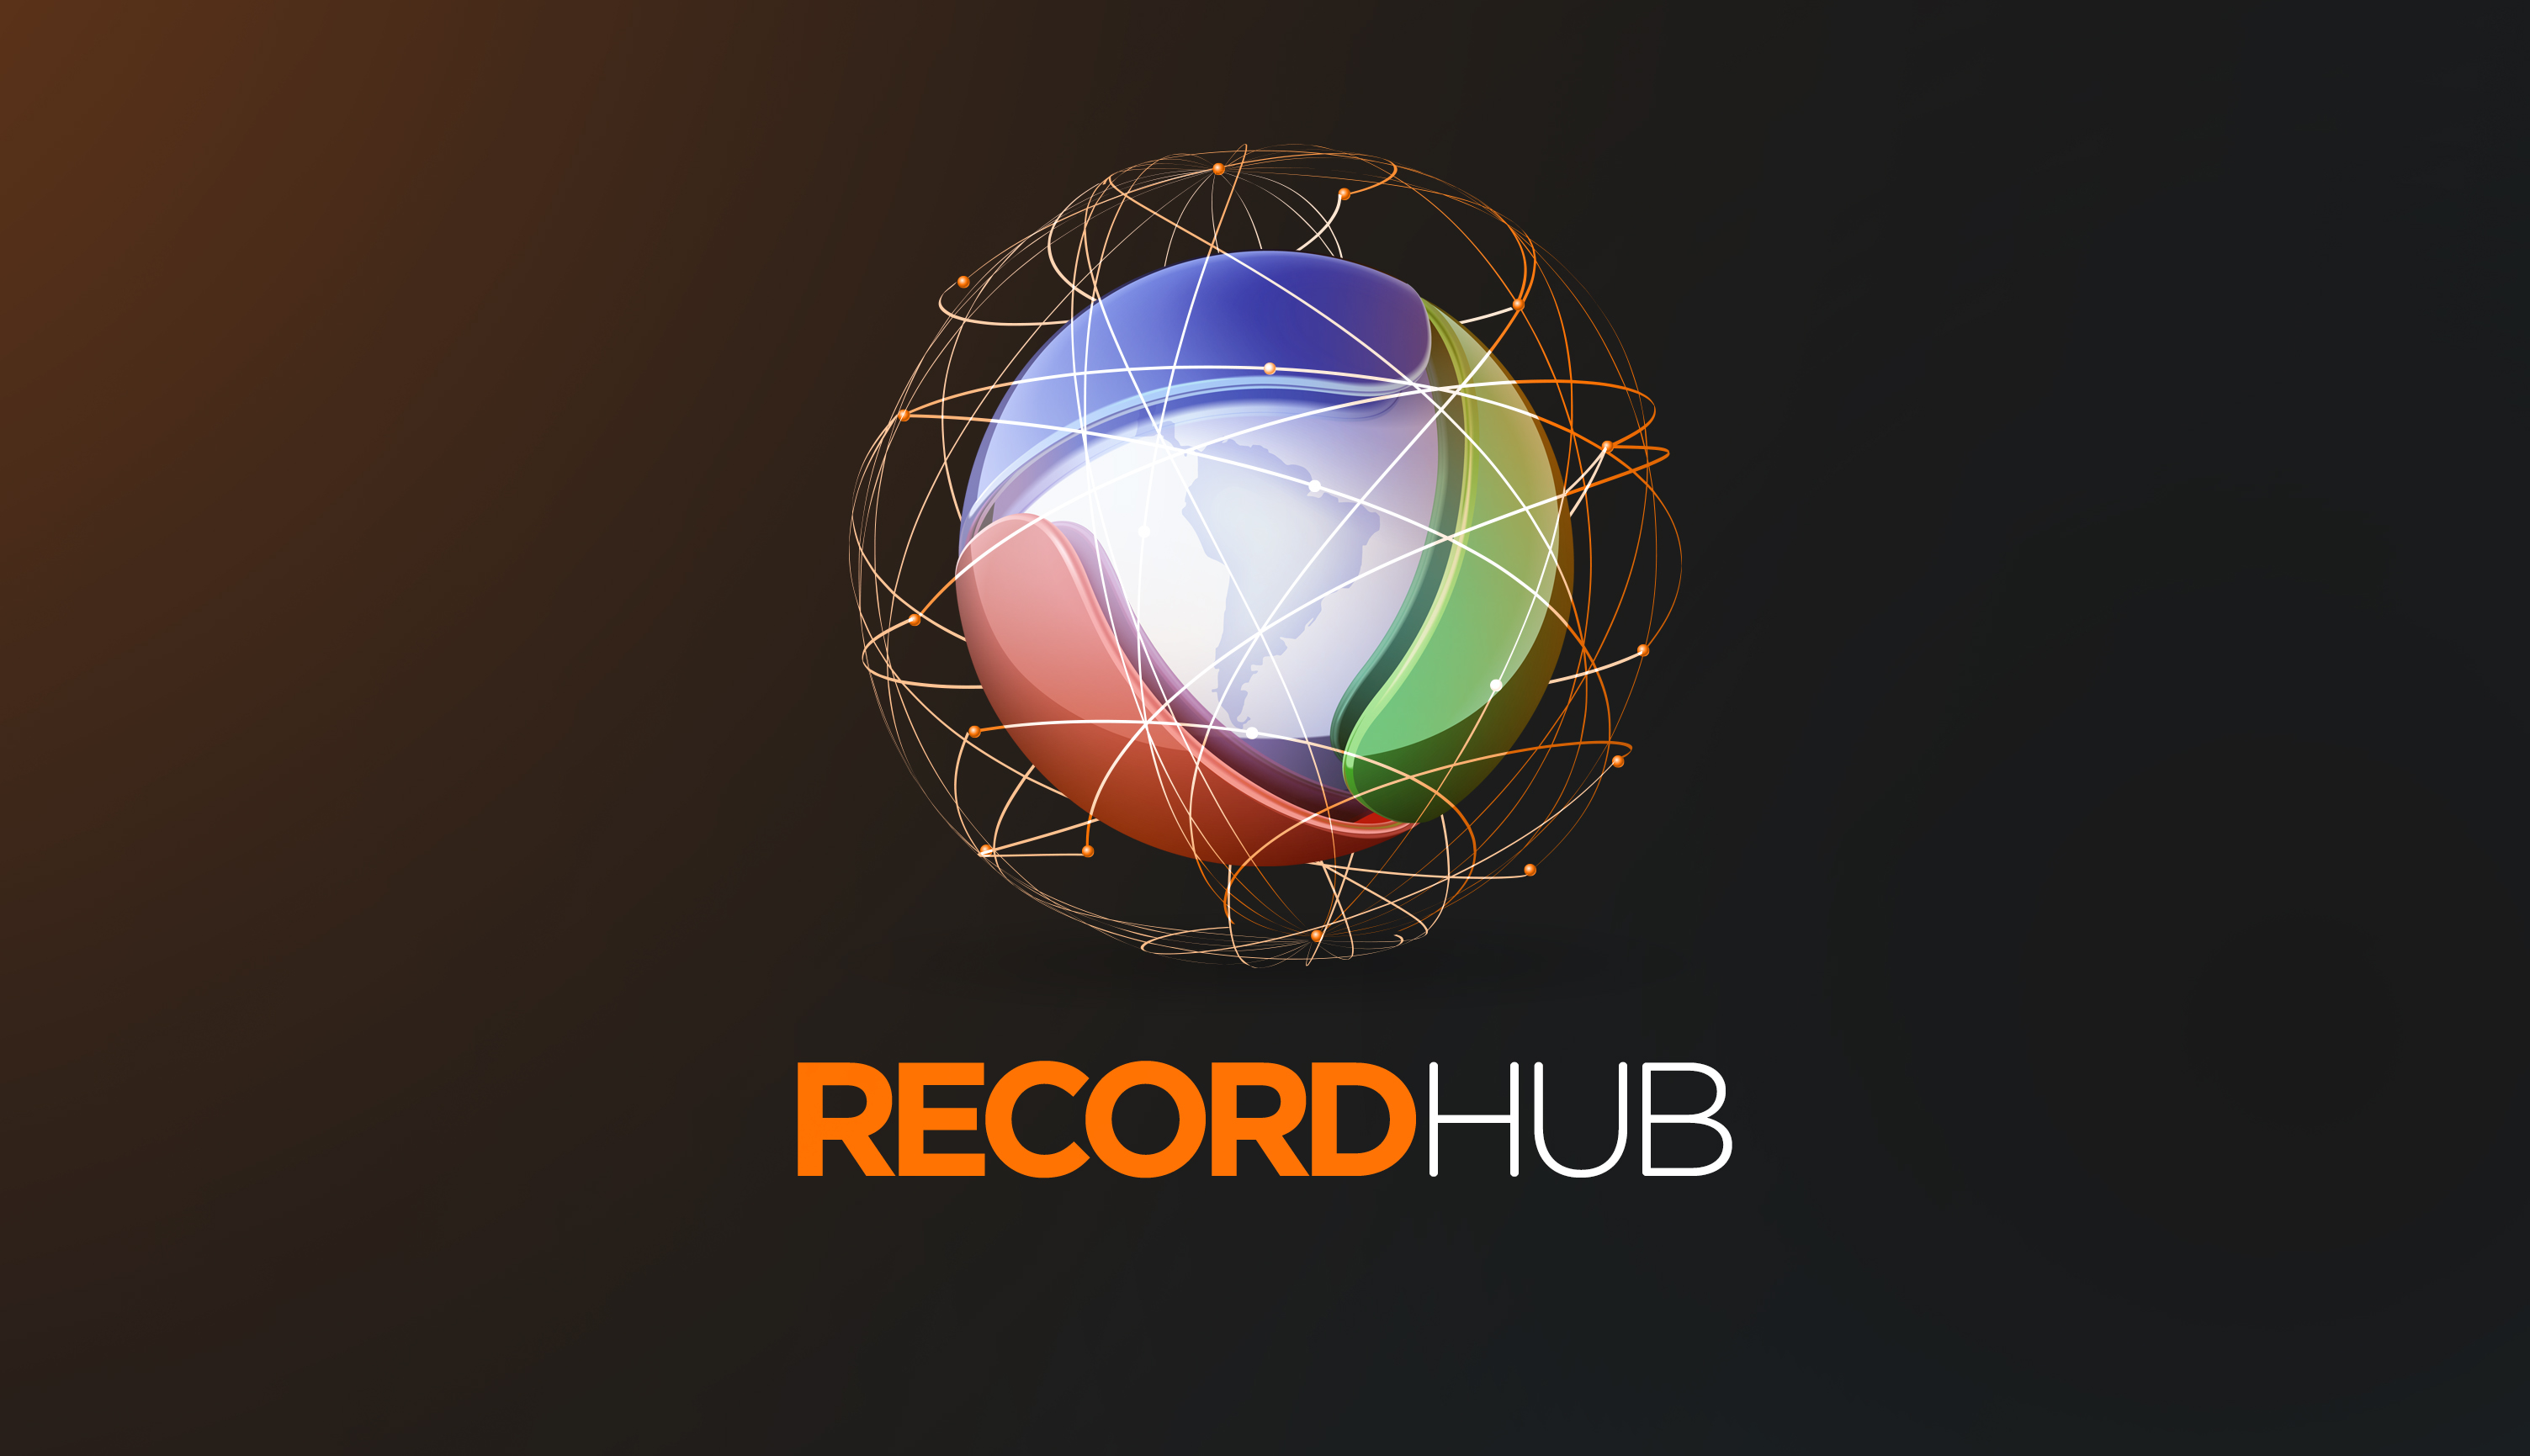 Record HUB